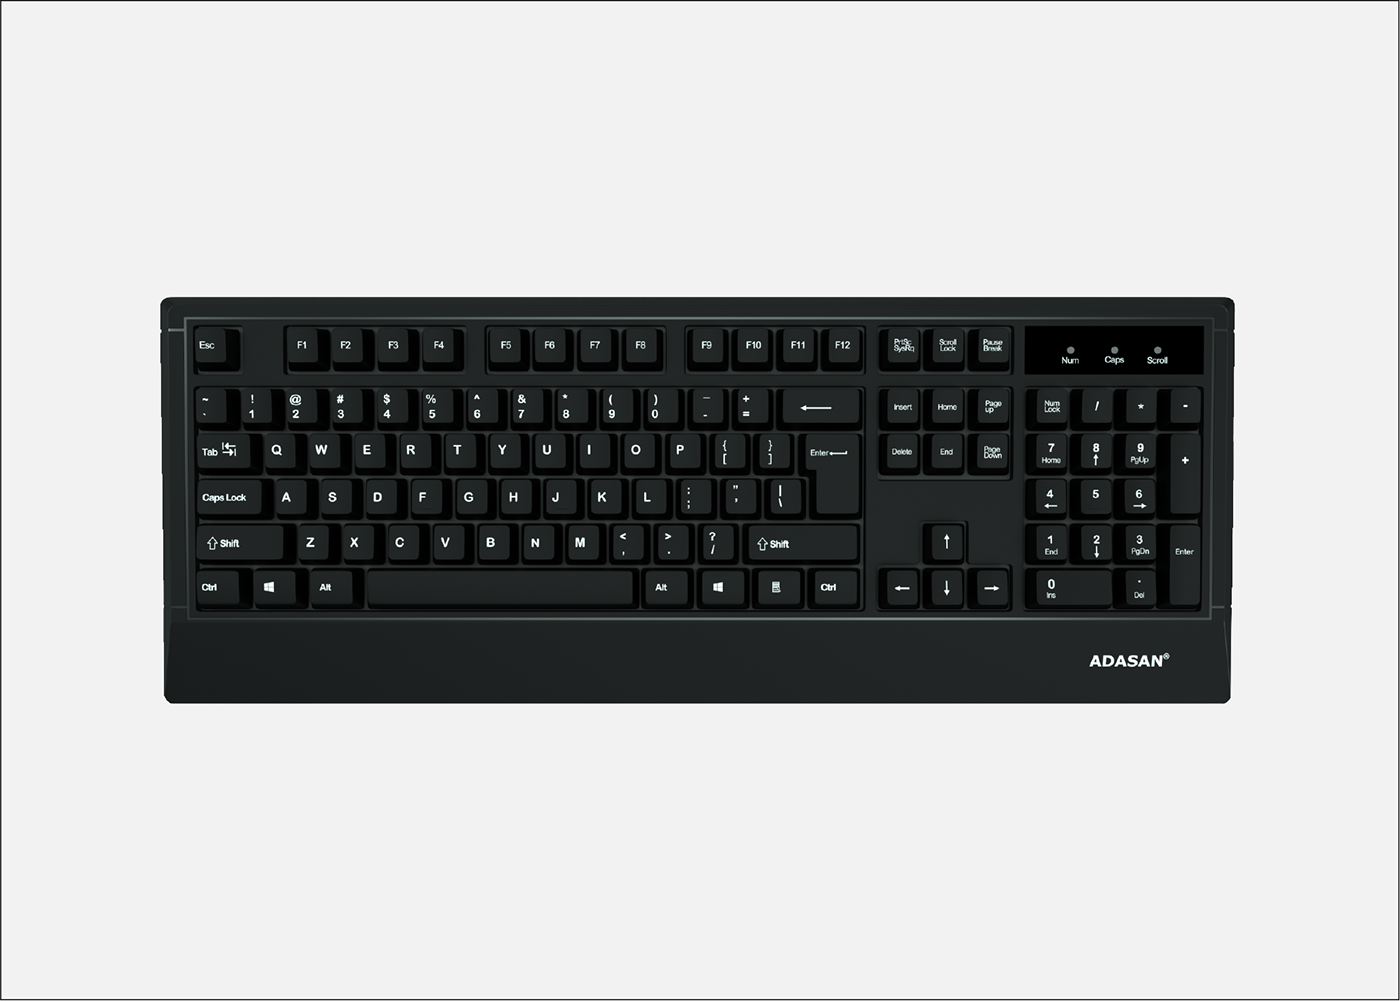 ADASAN Keyboard keyboard render rendering service Product Rendering Service India